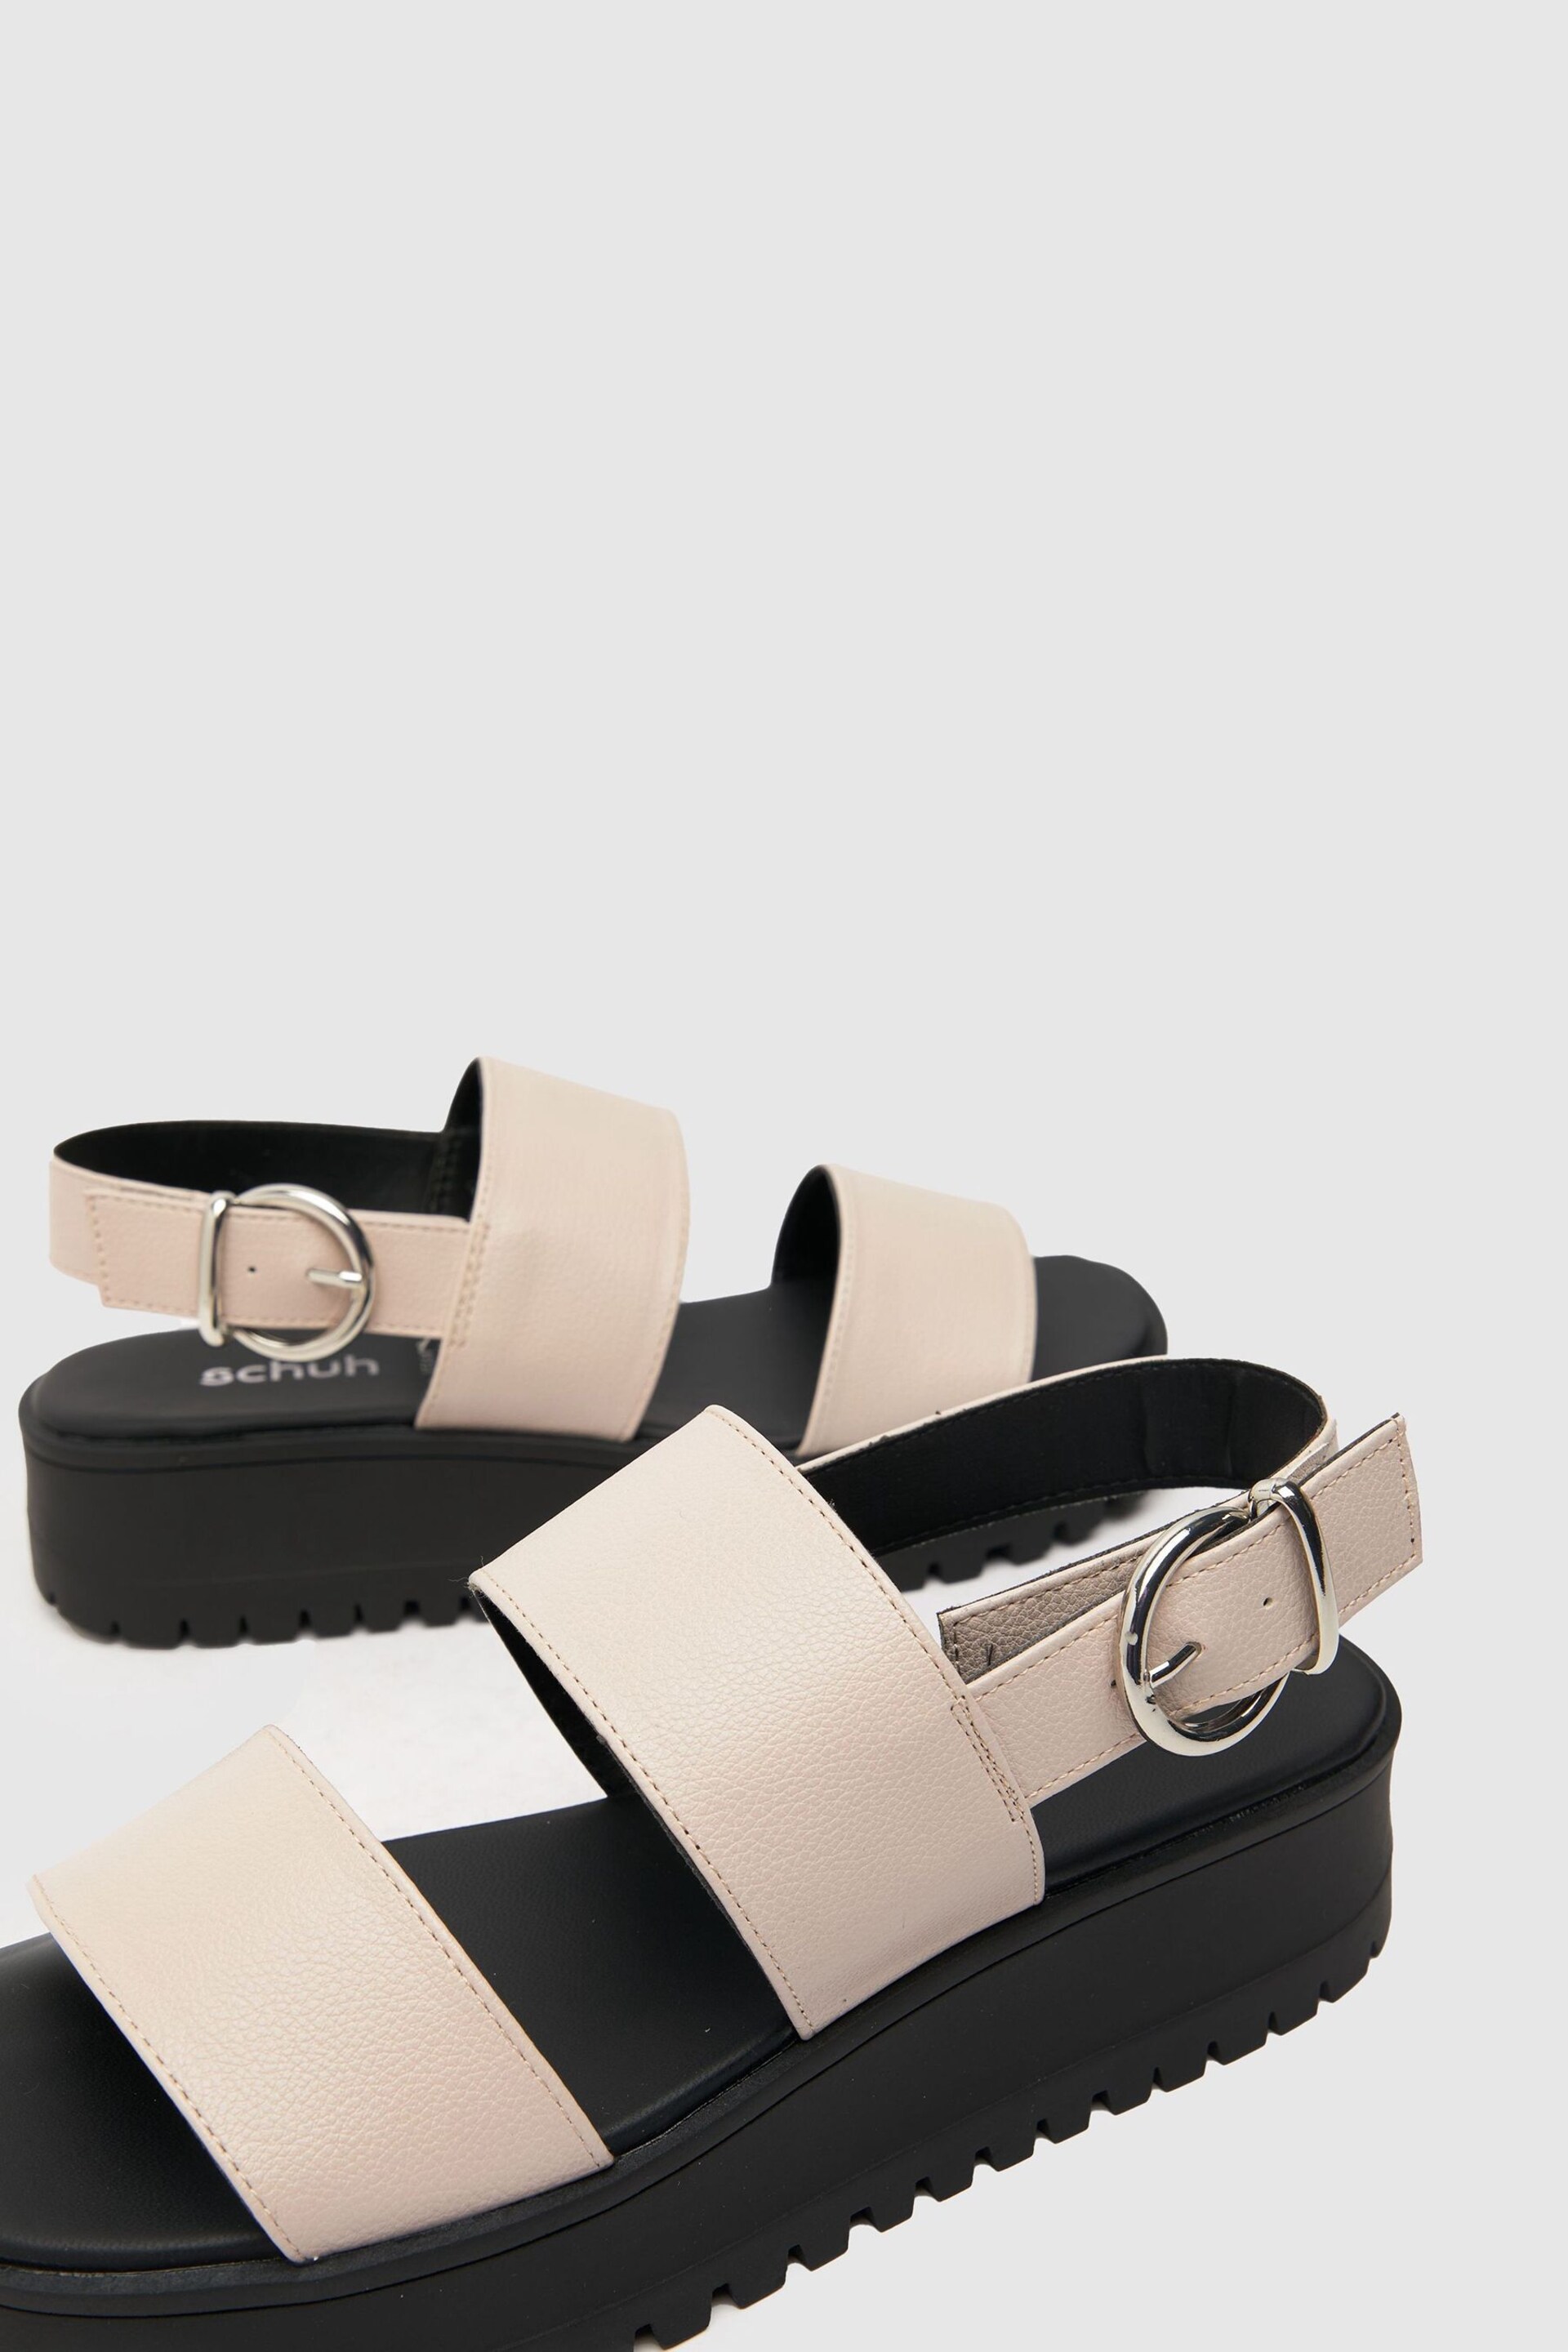 Schuh Tanya Chunky Flatform Sandals - Image 4 of 4